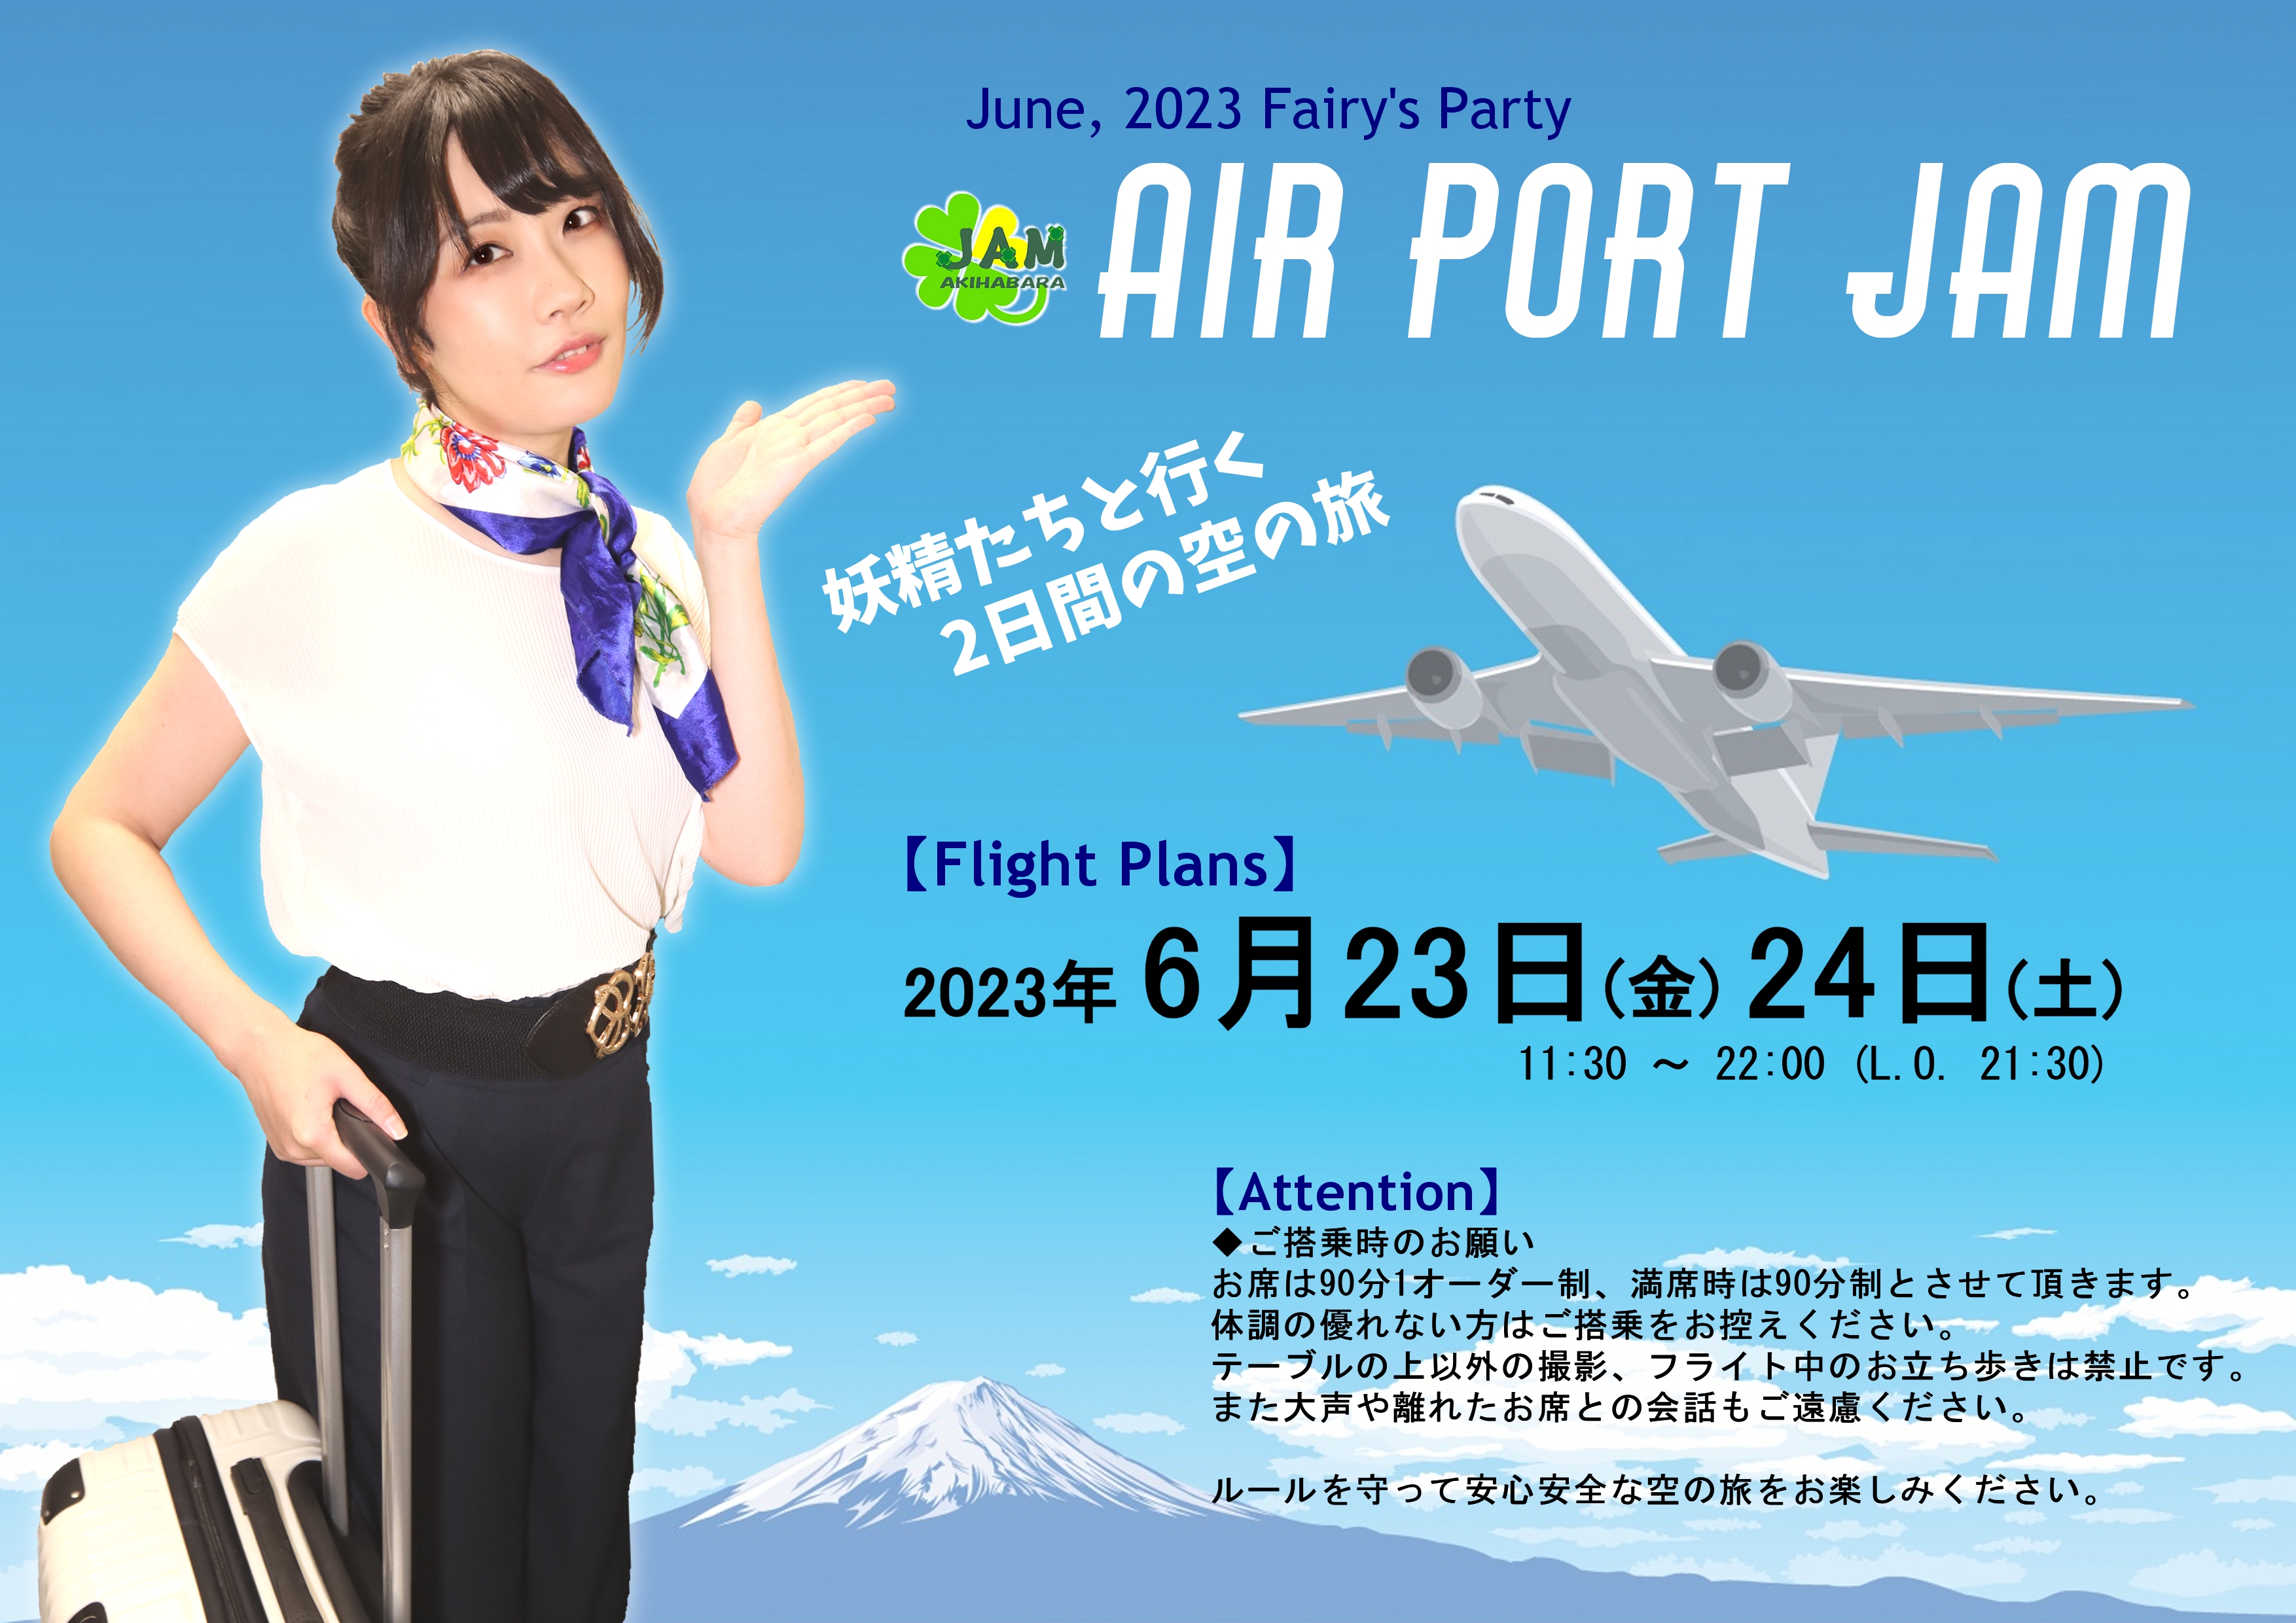 Air Port JAM